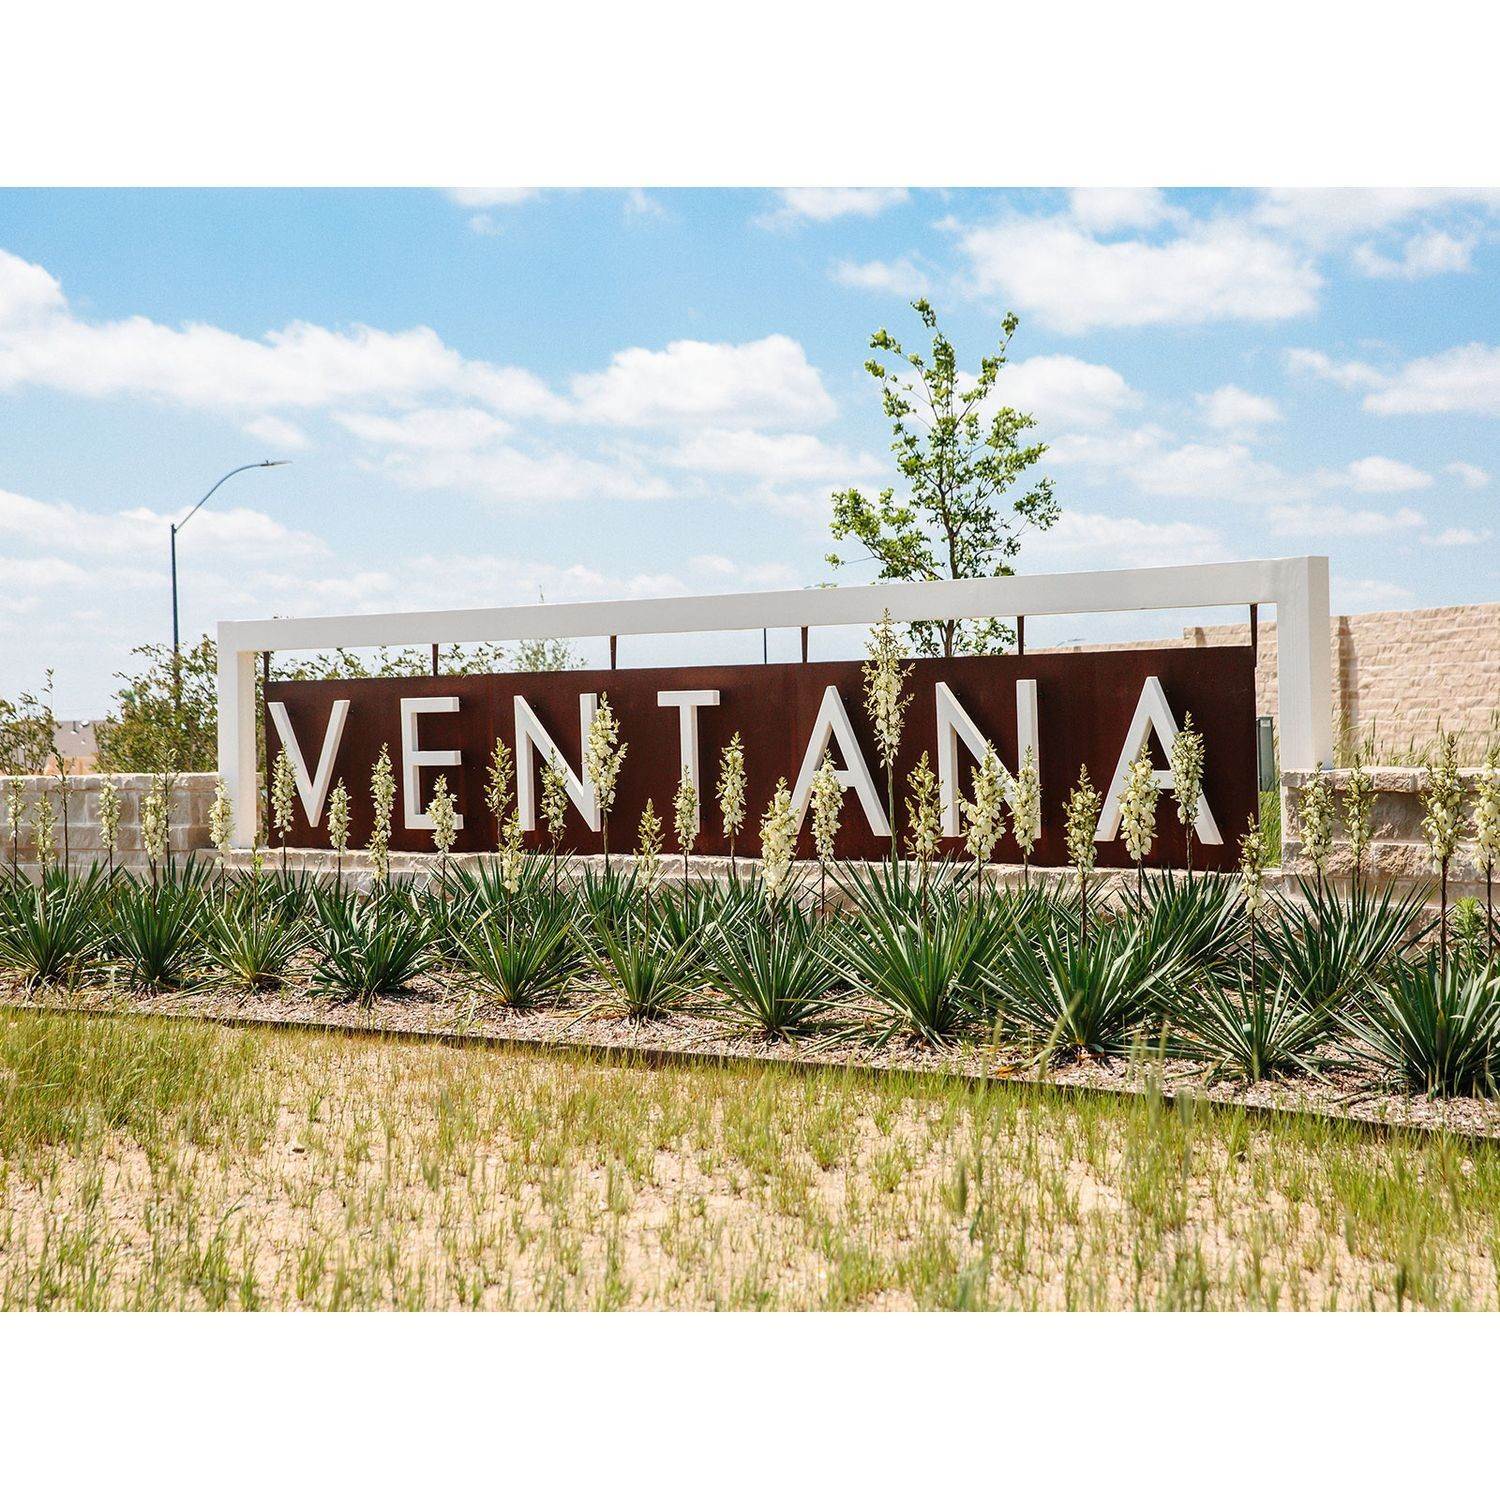 8. Ventana building at 5525 High Bank Road, Fort Worth, TX 76126